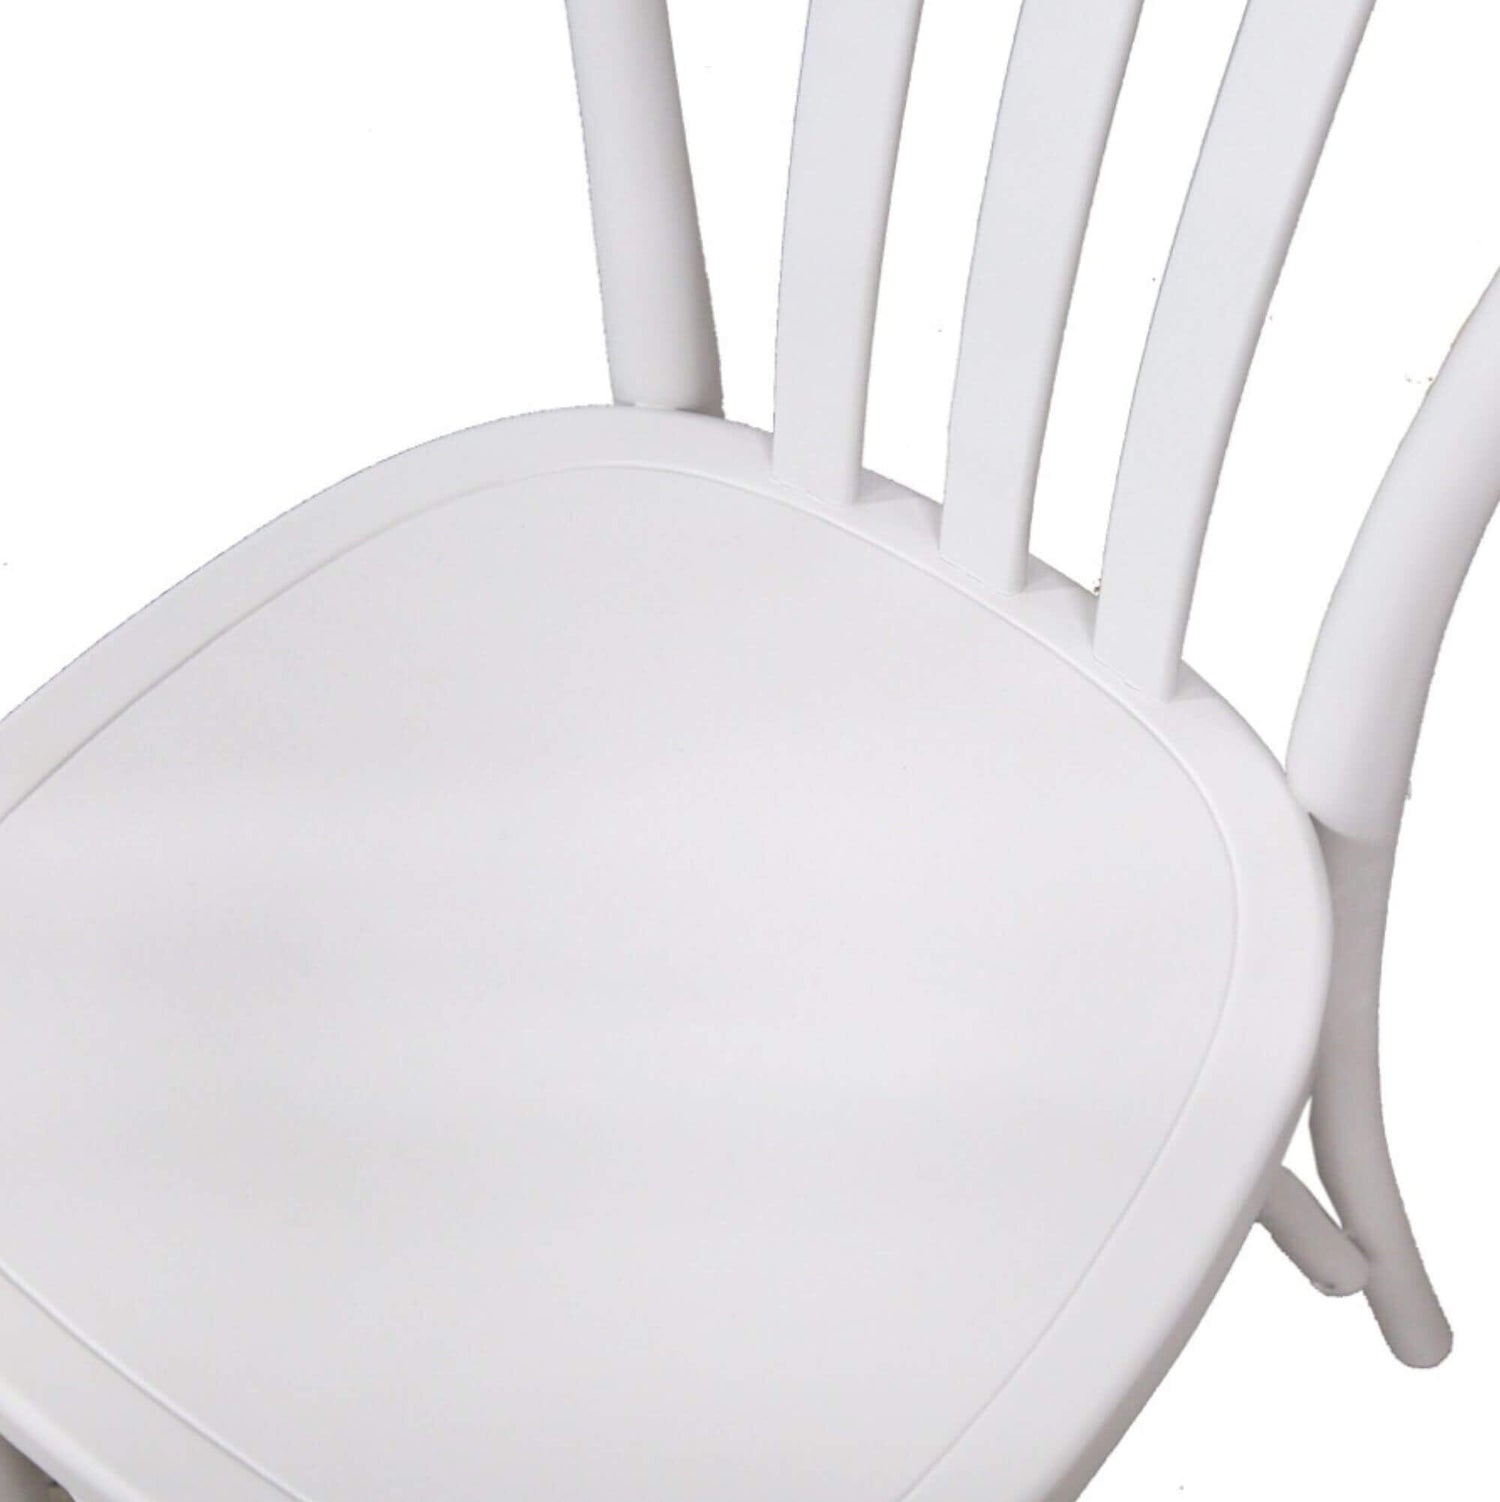 Bentwood Vertical Chair - Grey Dining Furniture Beachwood Designs 